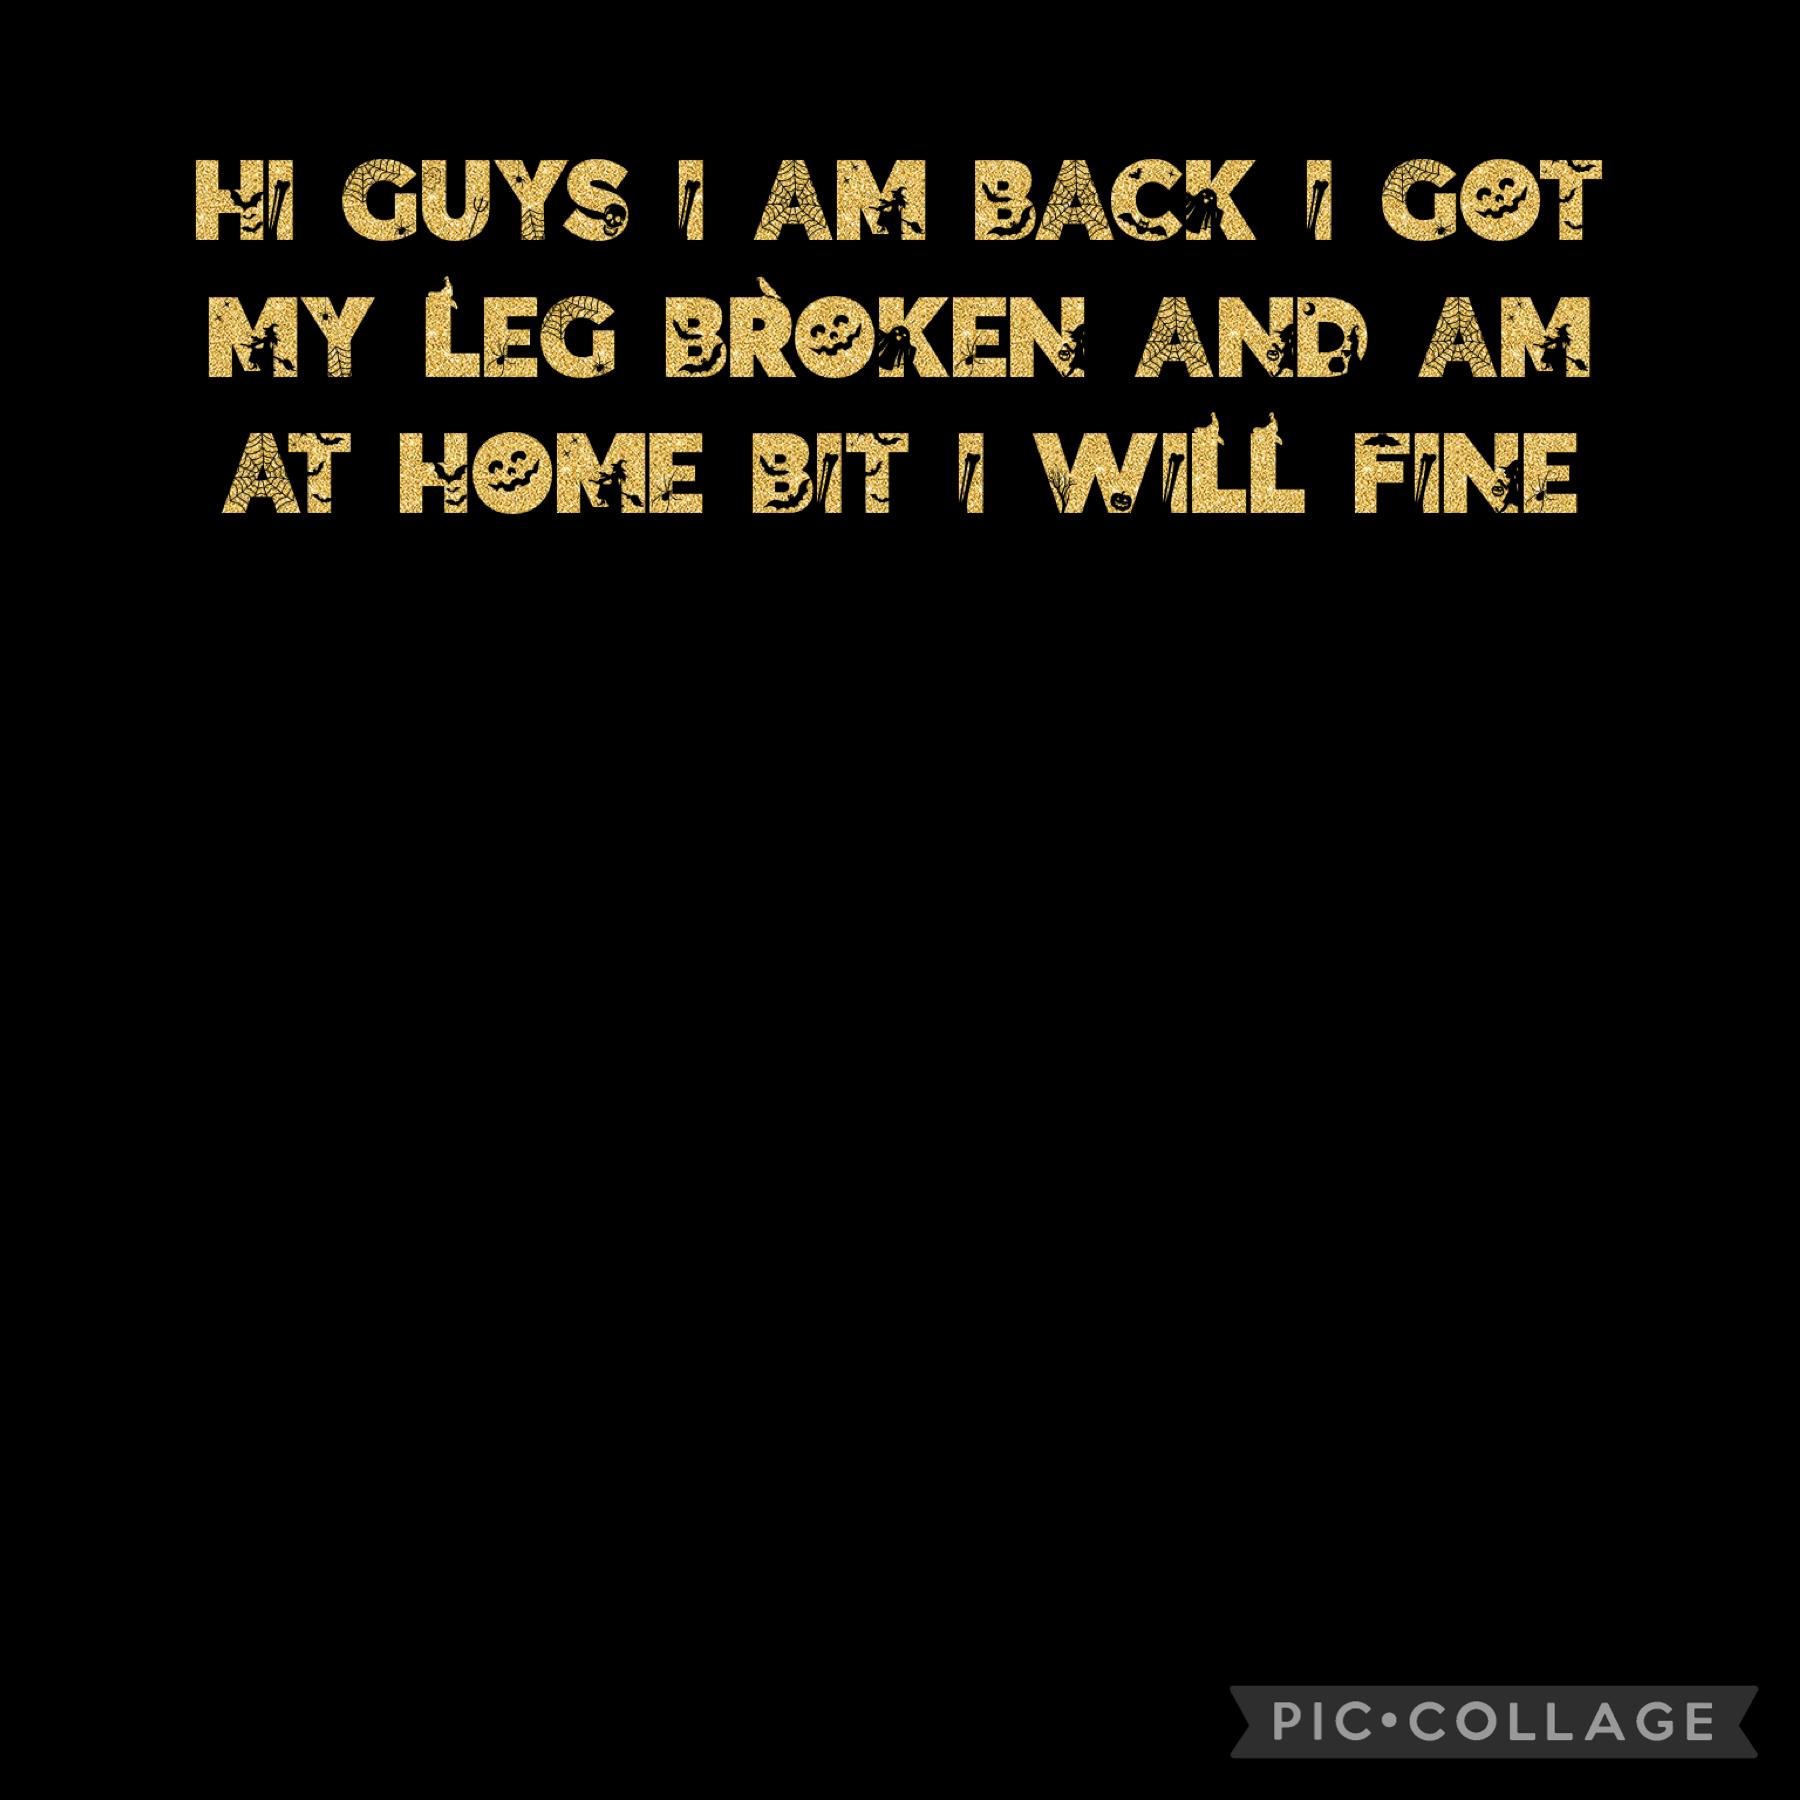 I got my leg broken